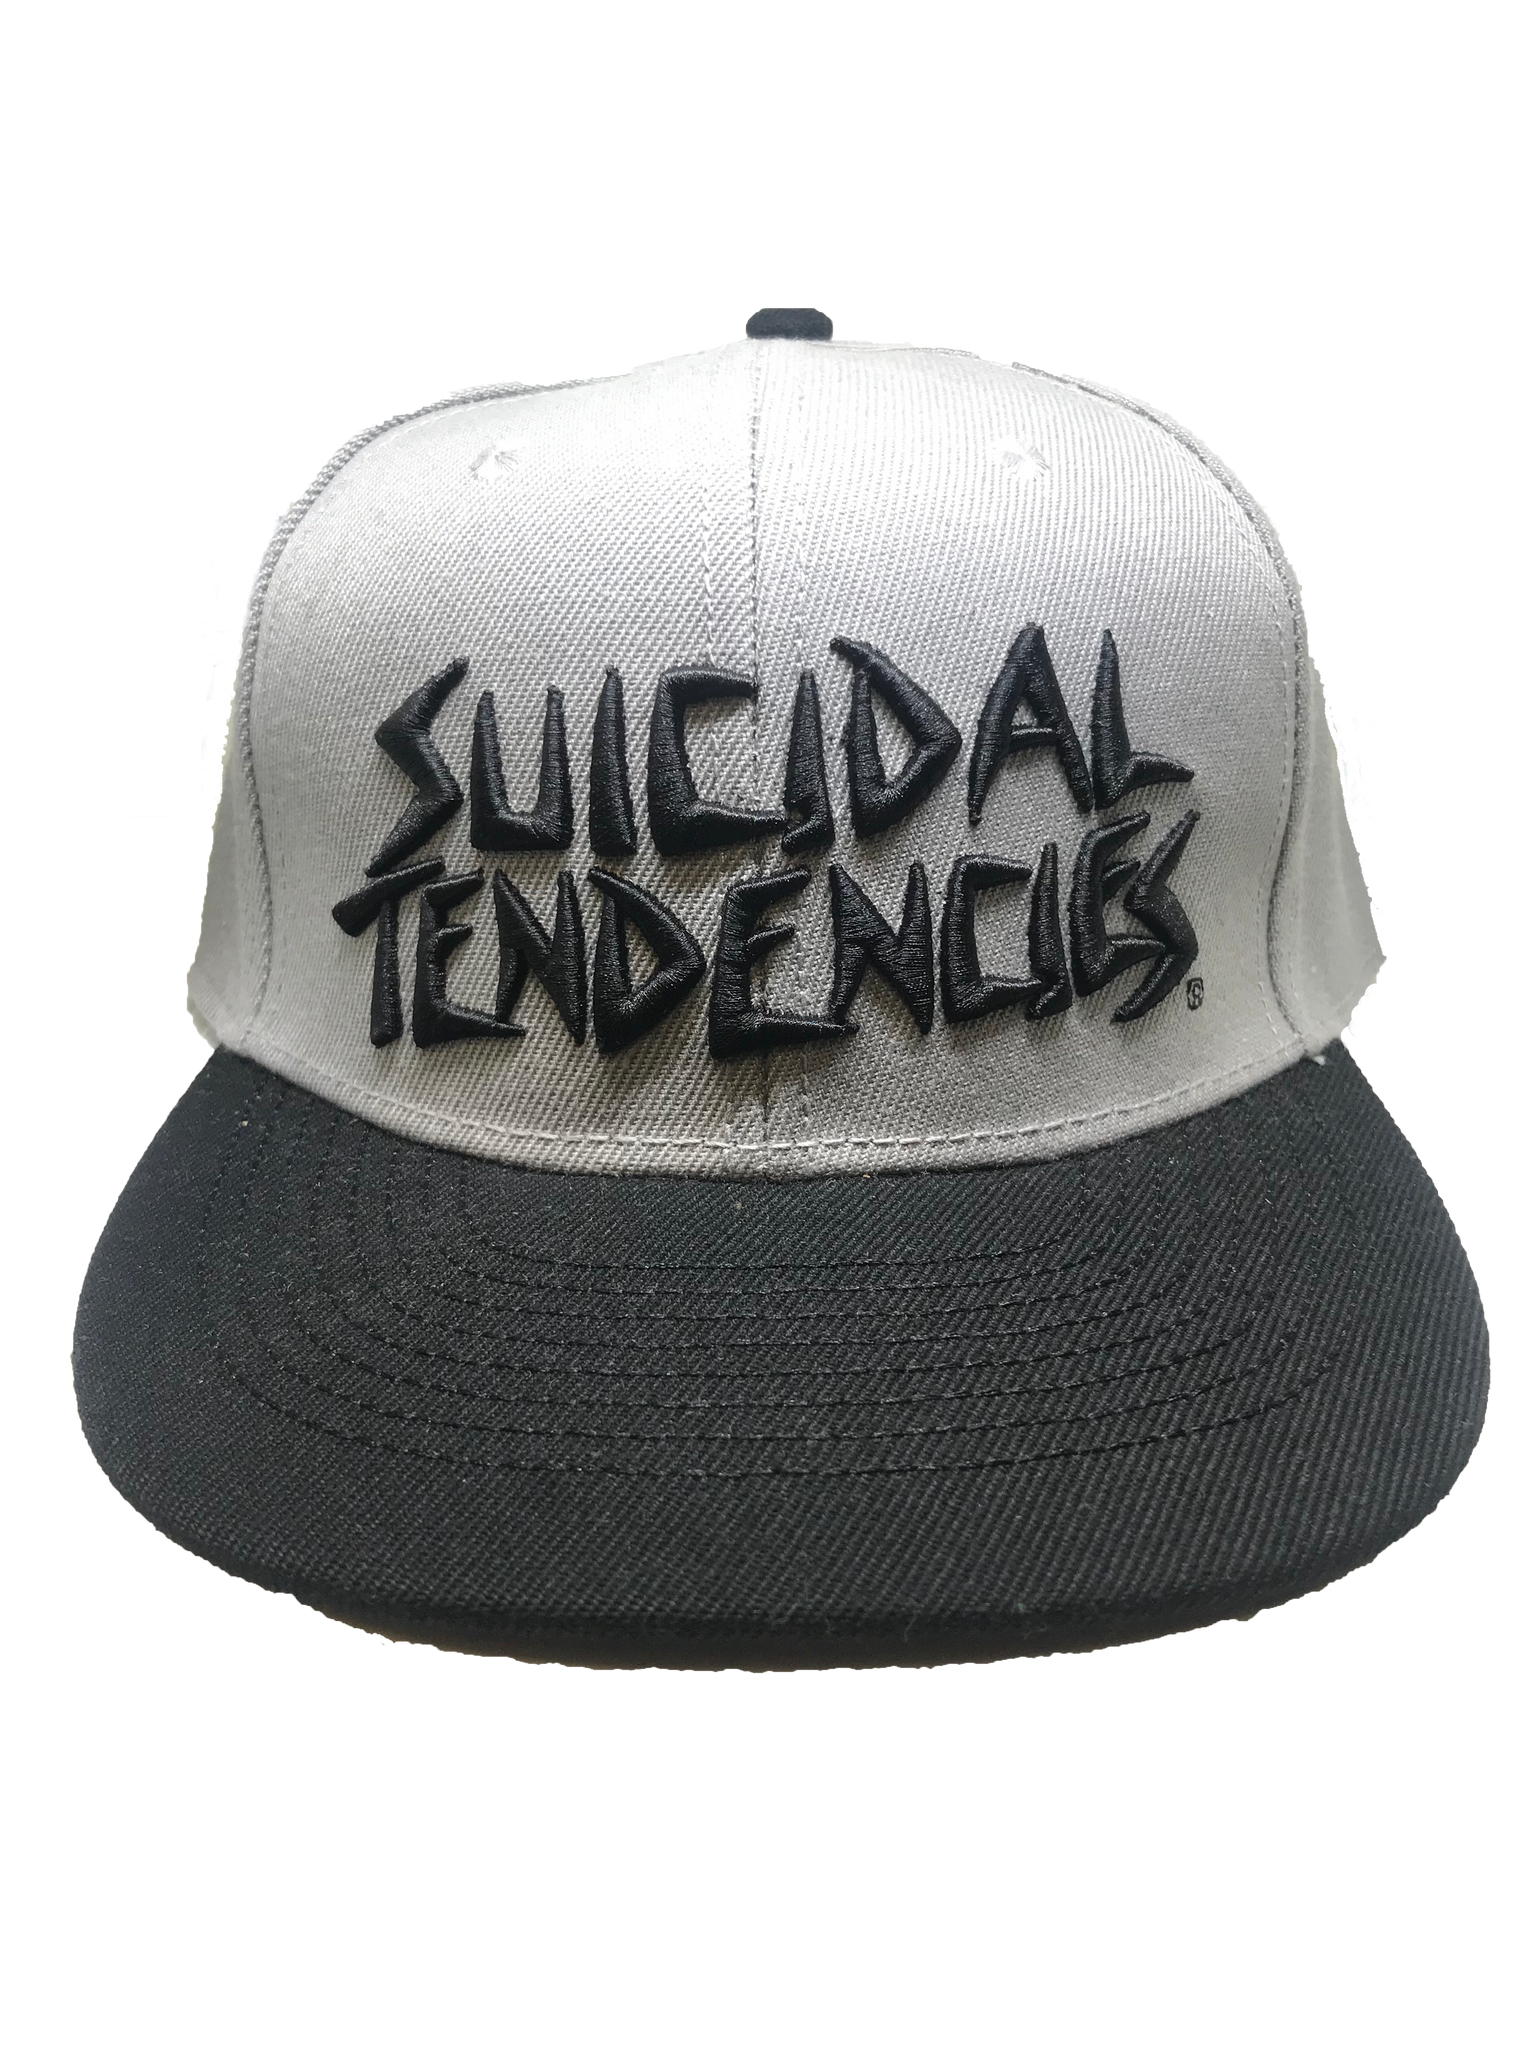 SUICIDAL TENDENCIES EMBROIDERED CAP